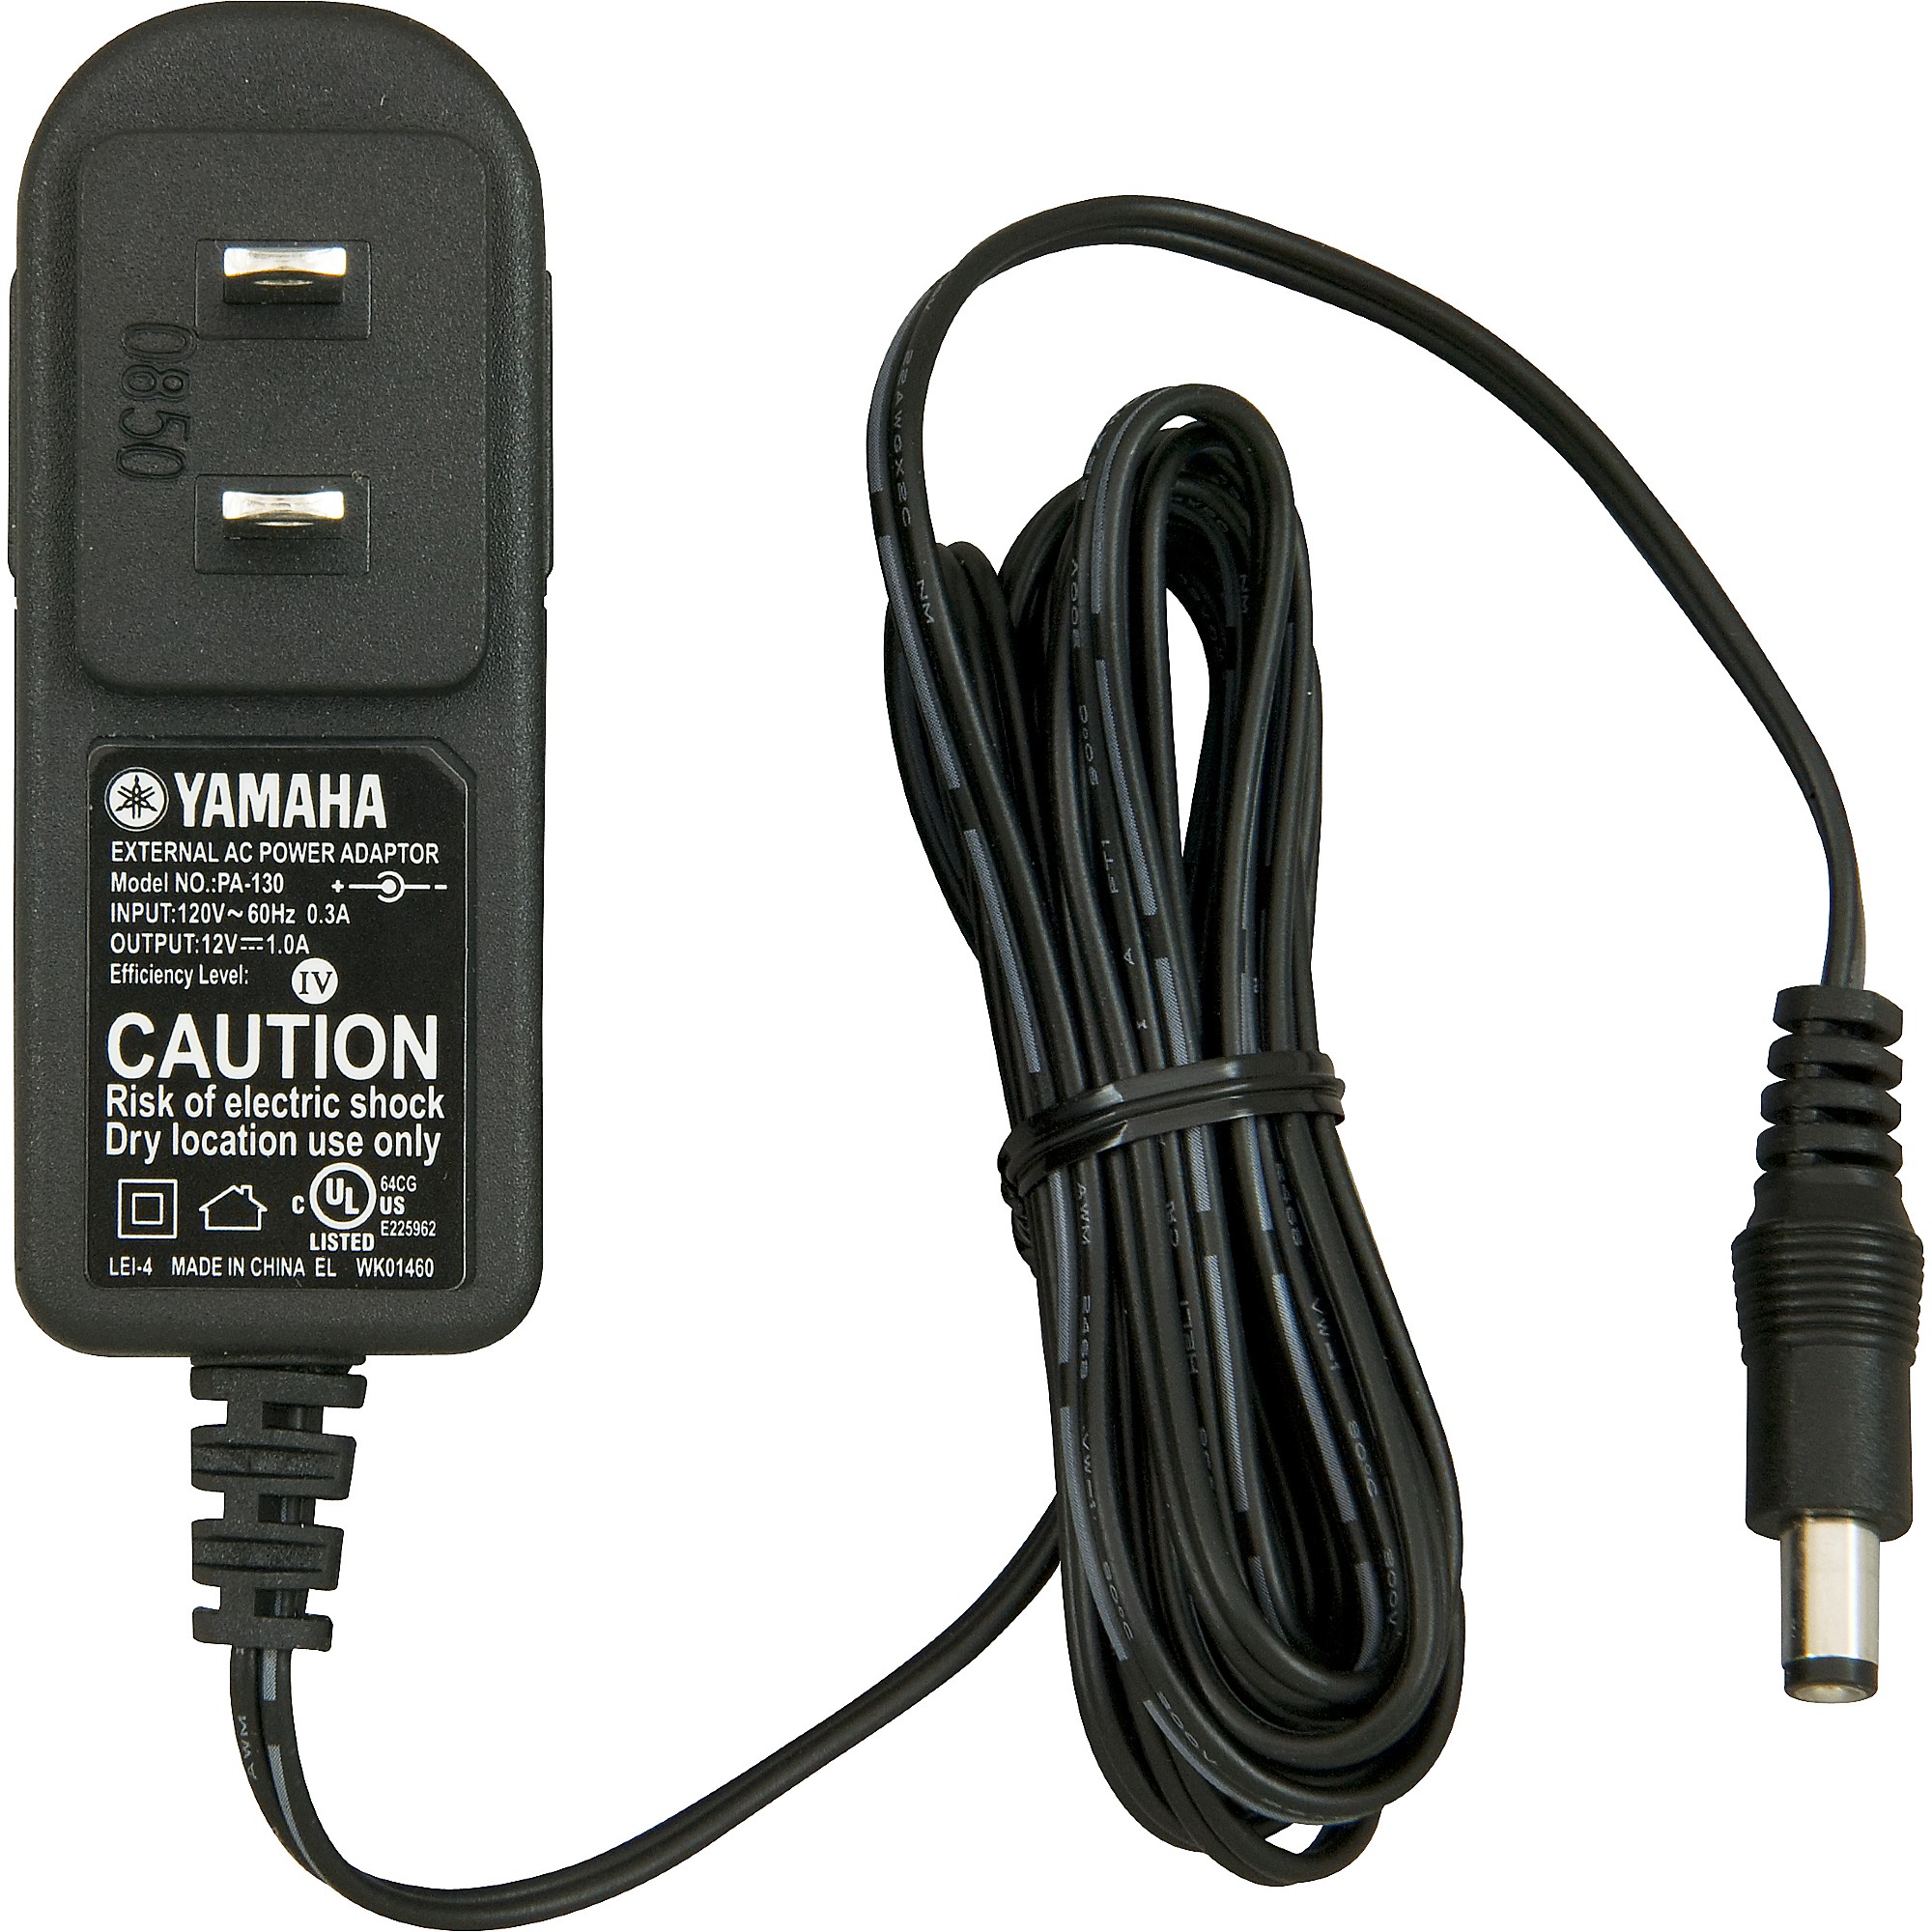 Genuine Yamaha PA130 120V AC Power Supply Adapter Cord for Yamaha Keyboard 